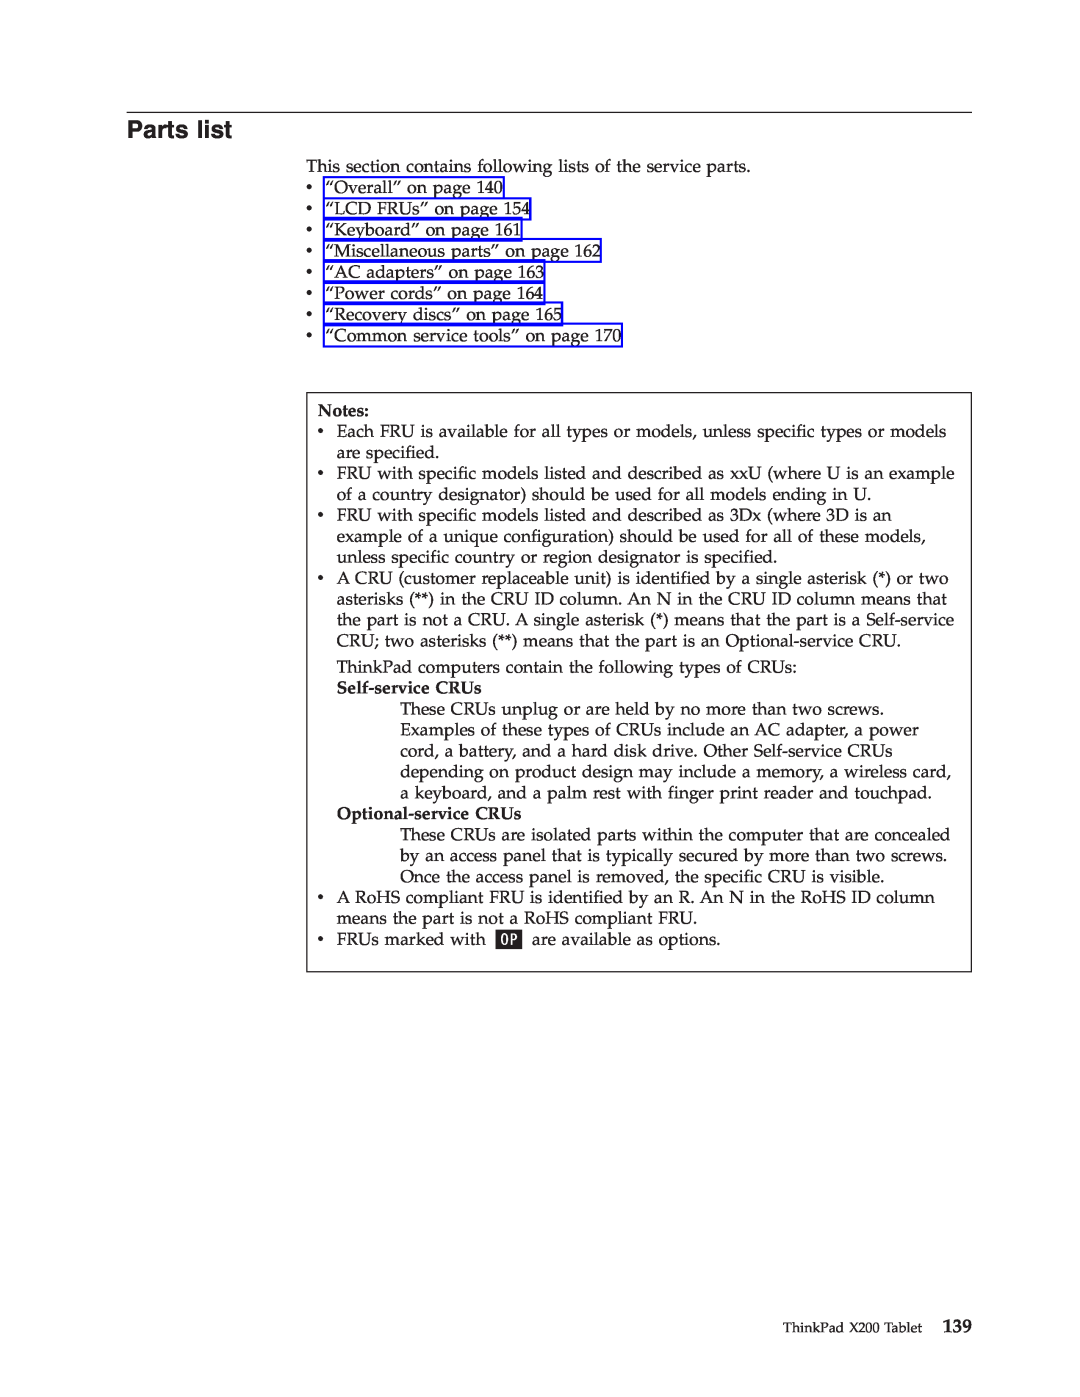 Lenovo X200 manual Parts list, Notes, Self-serviceCRUs, Optional-serviceCRUs 